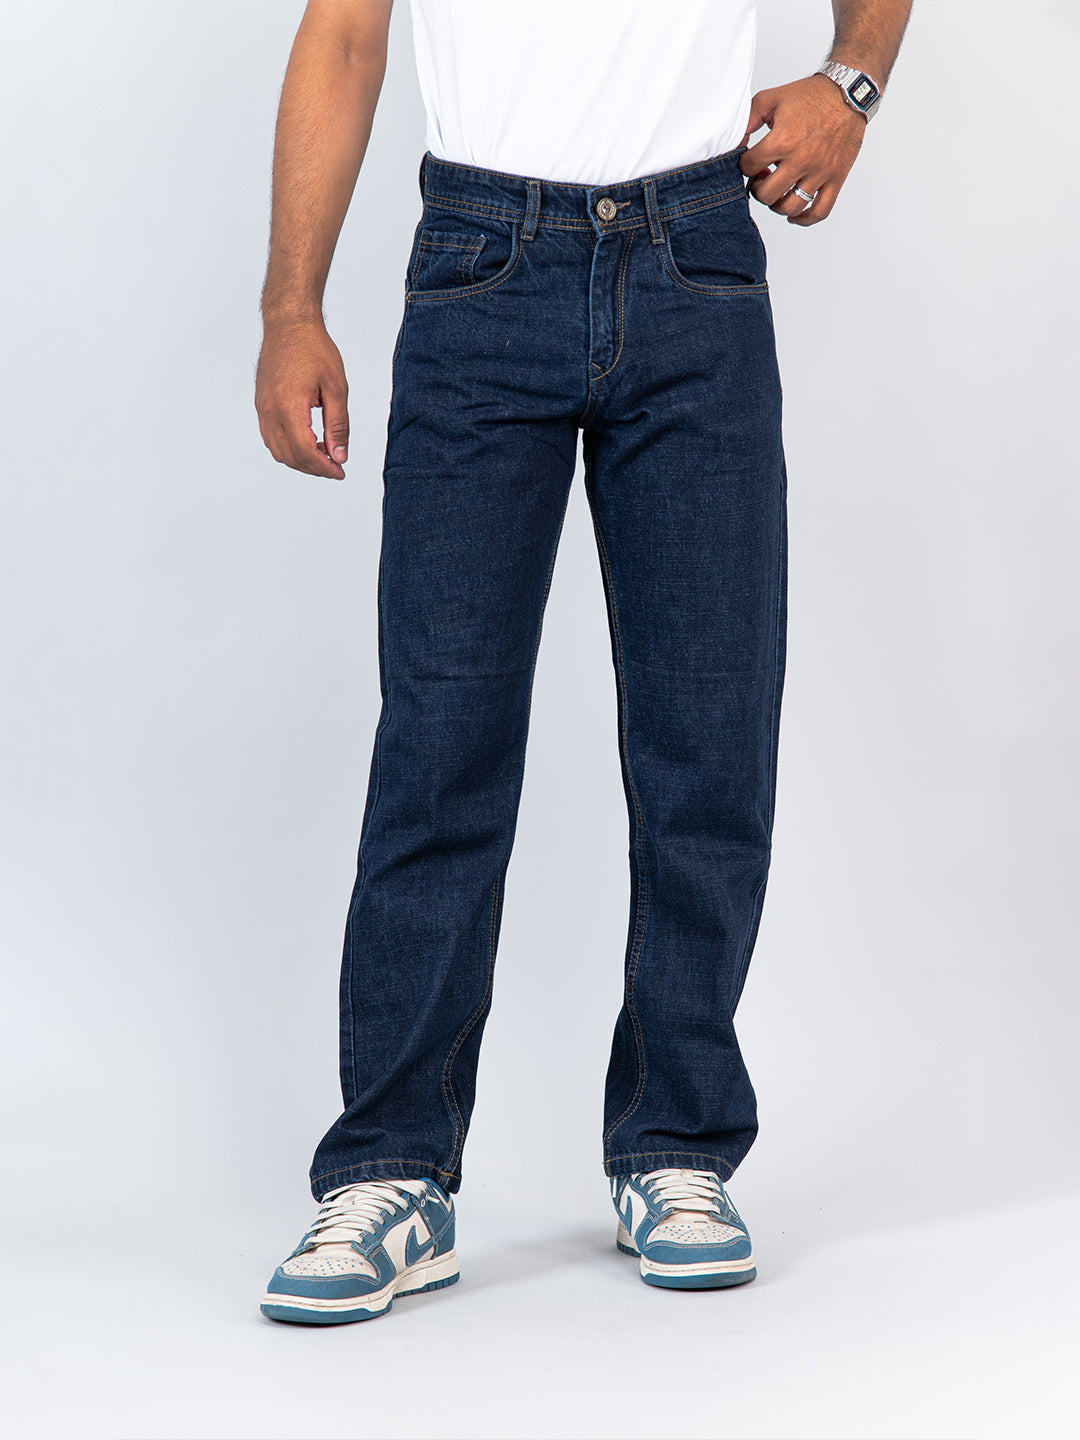 Buy Dark Blue Straight Fit Mens Jeans Online